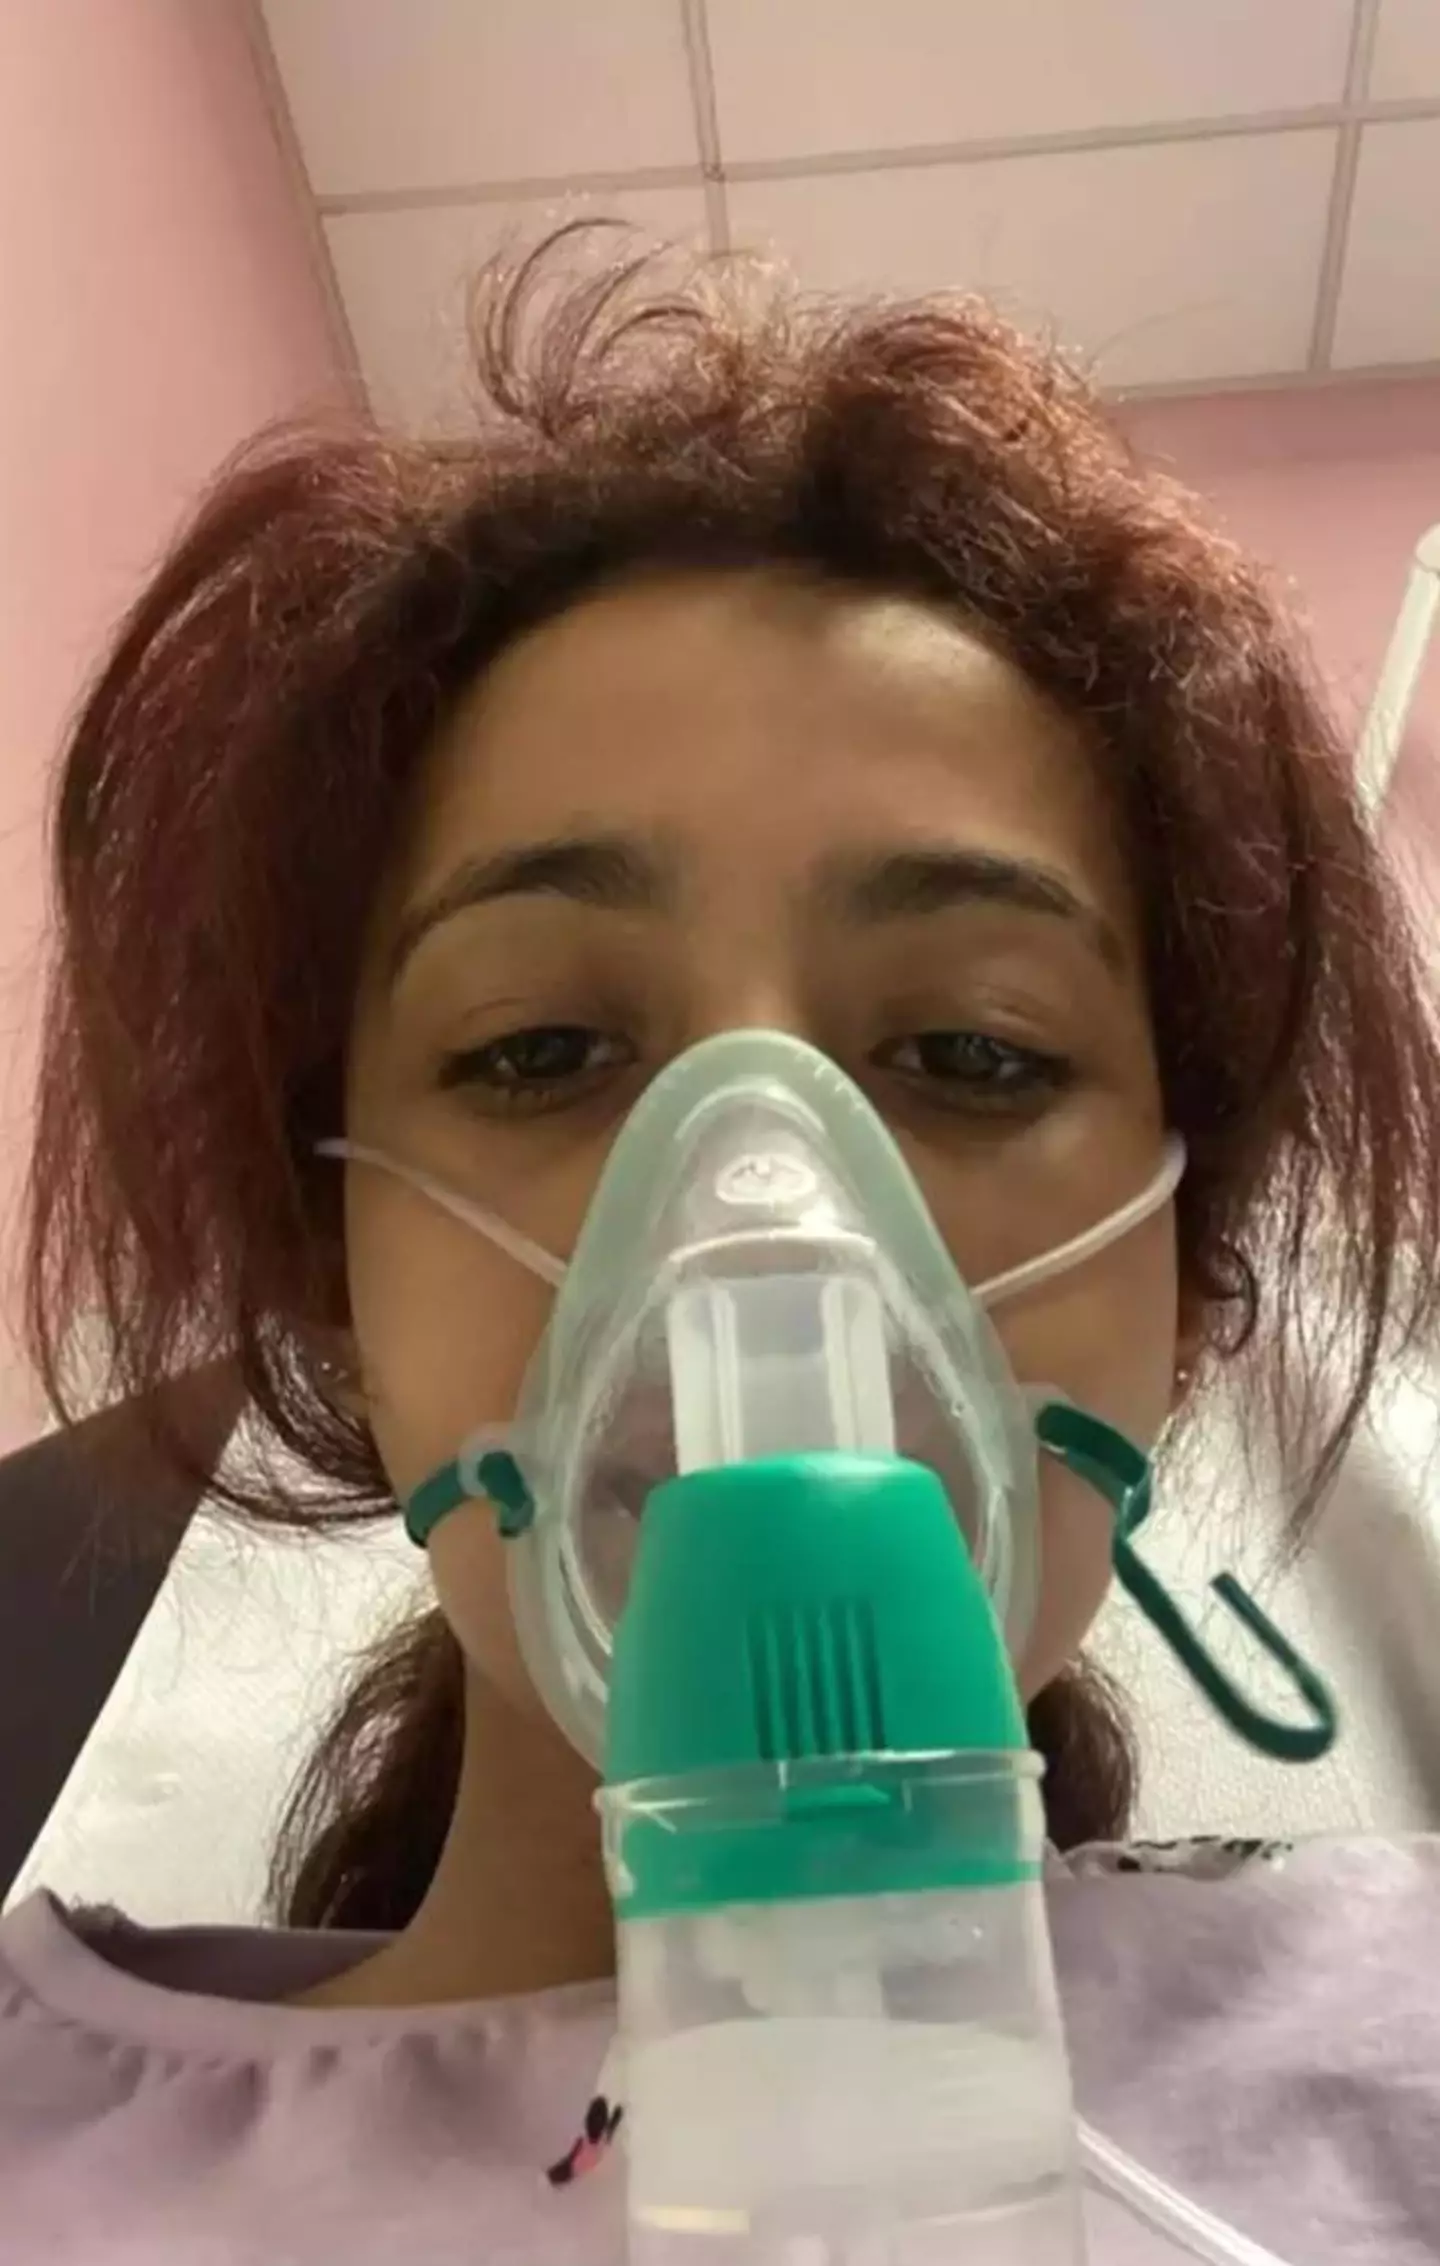 Doctors said vaping had left Sarah's lungs 'very weak'.